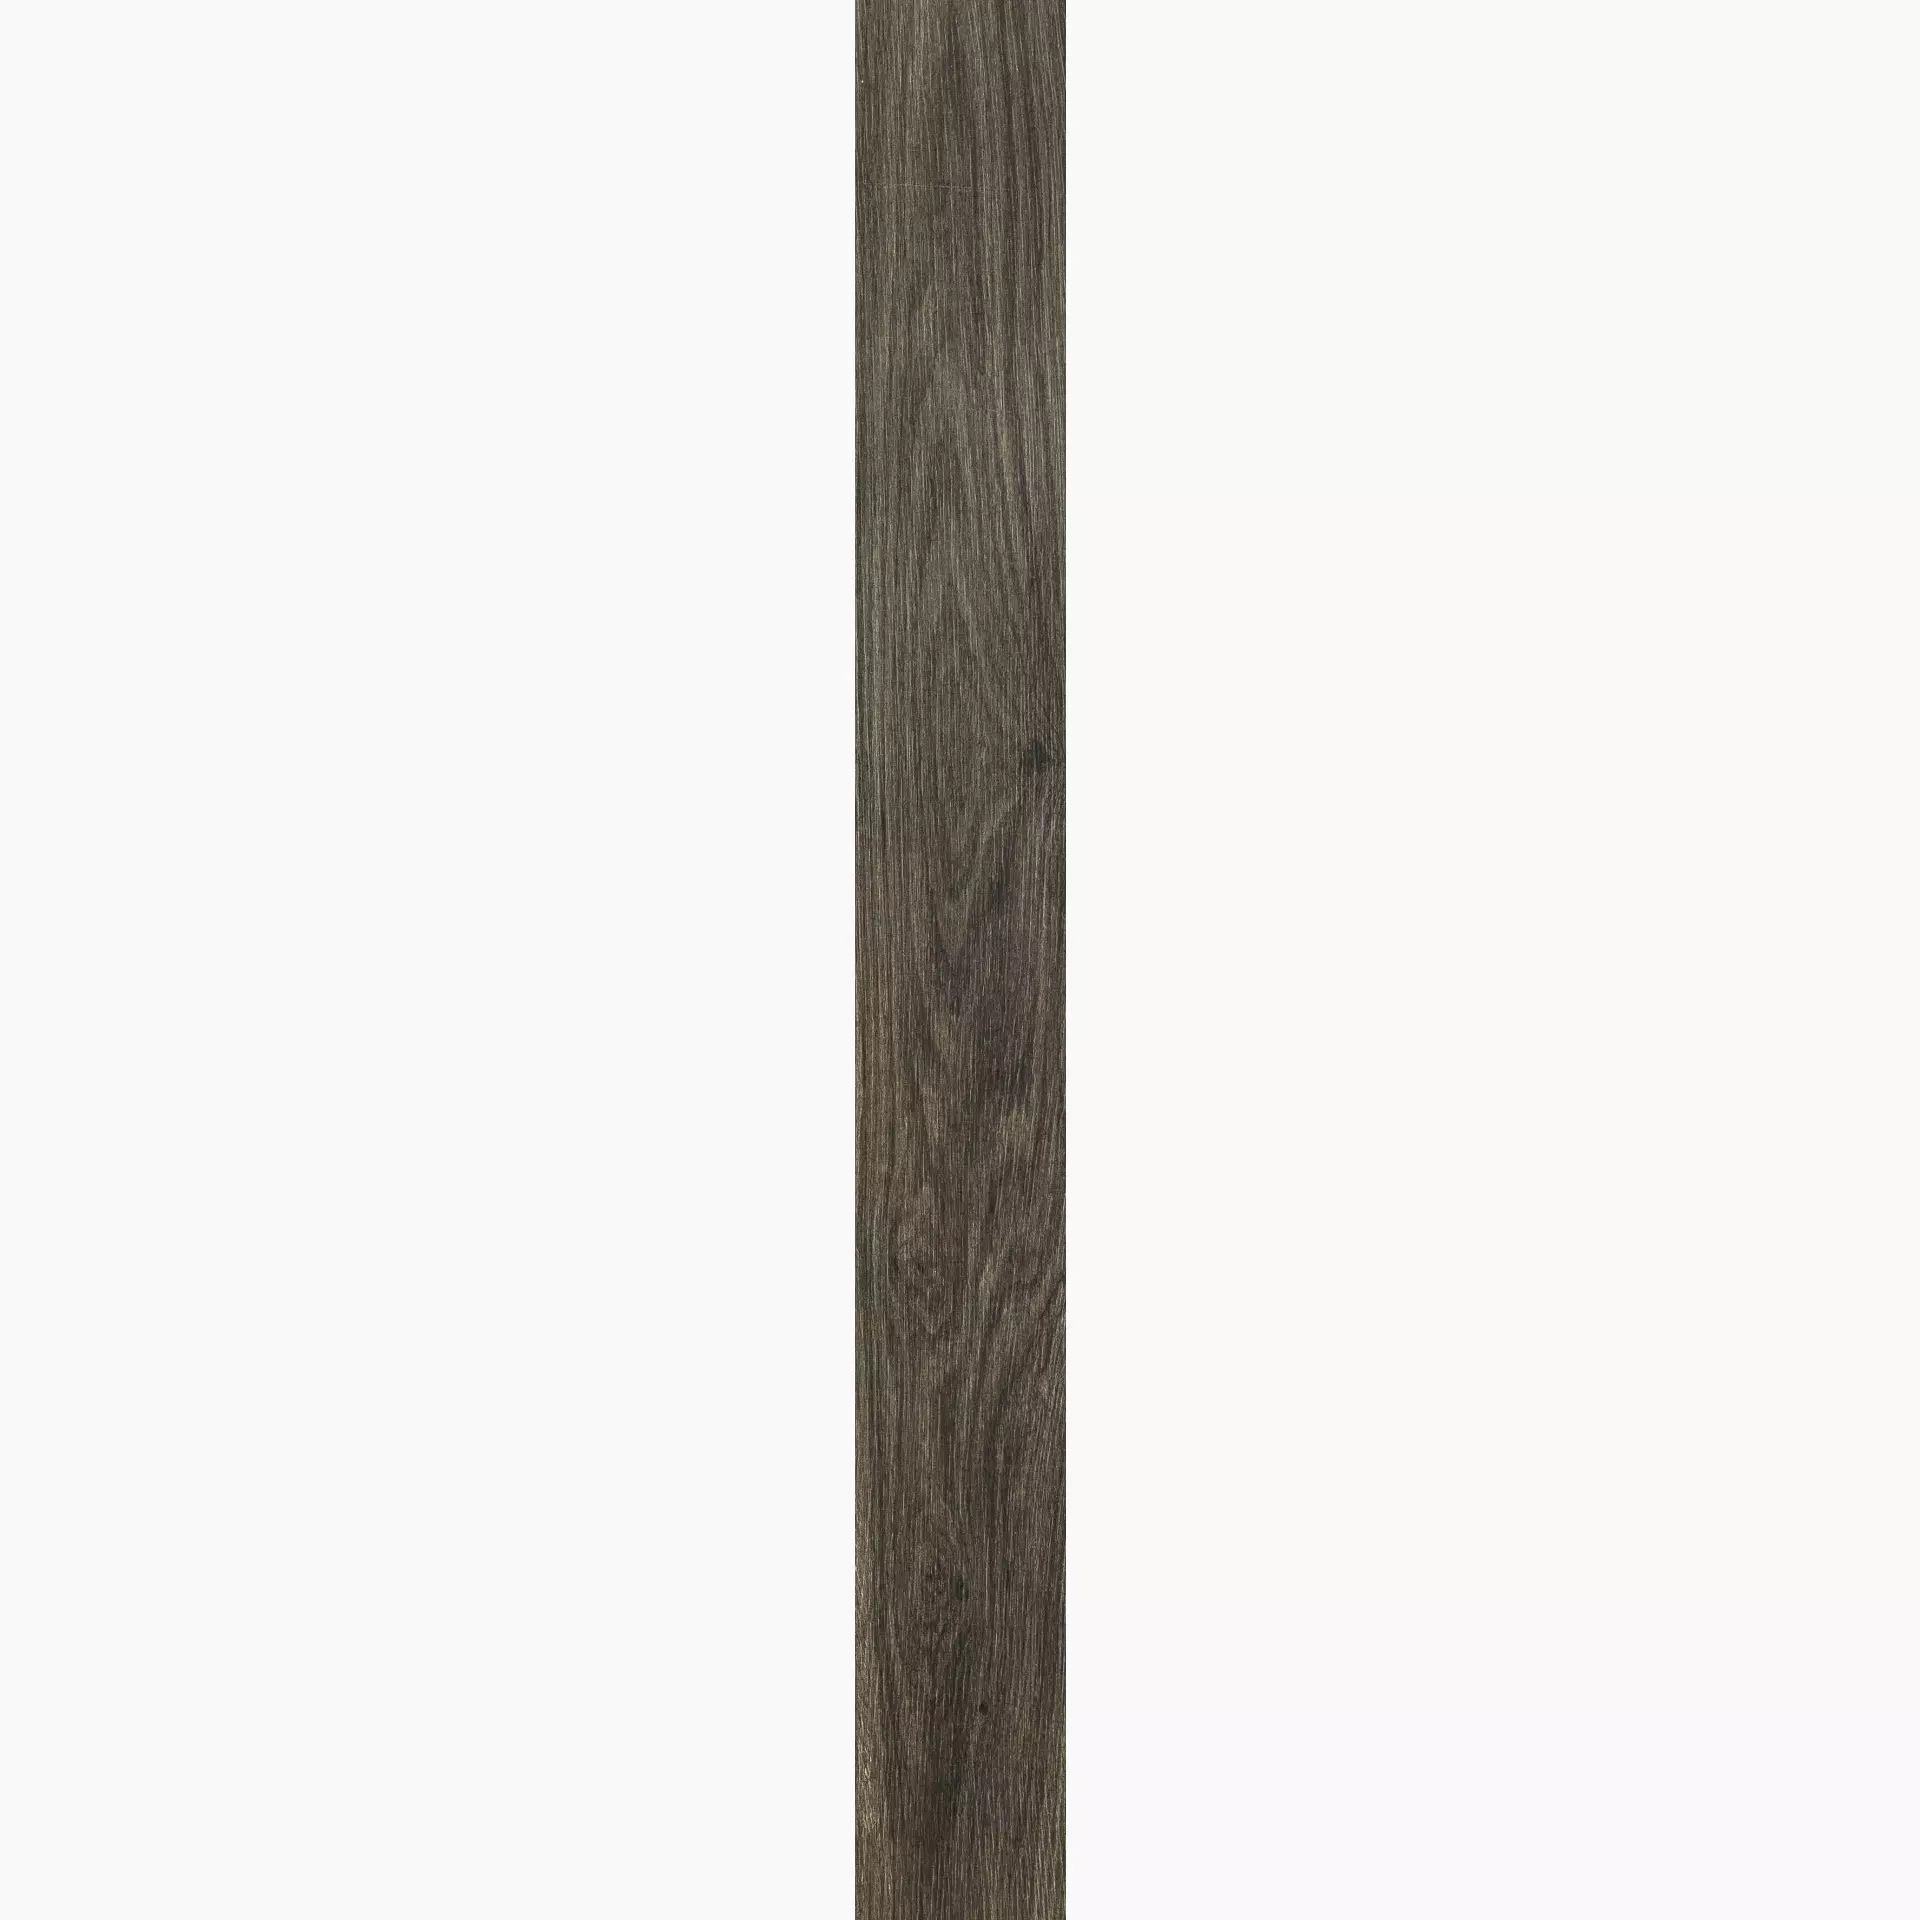 Florim Planches De Rex Choco Naturale – Matt 755703 20x180cm rectified 9mm